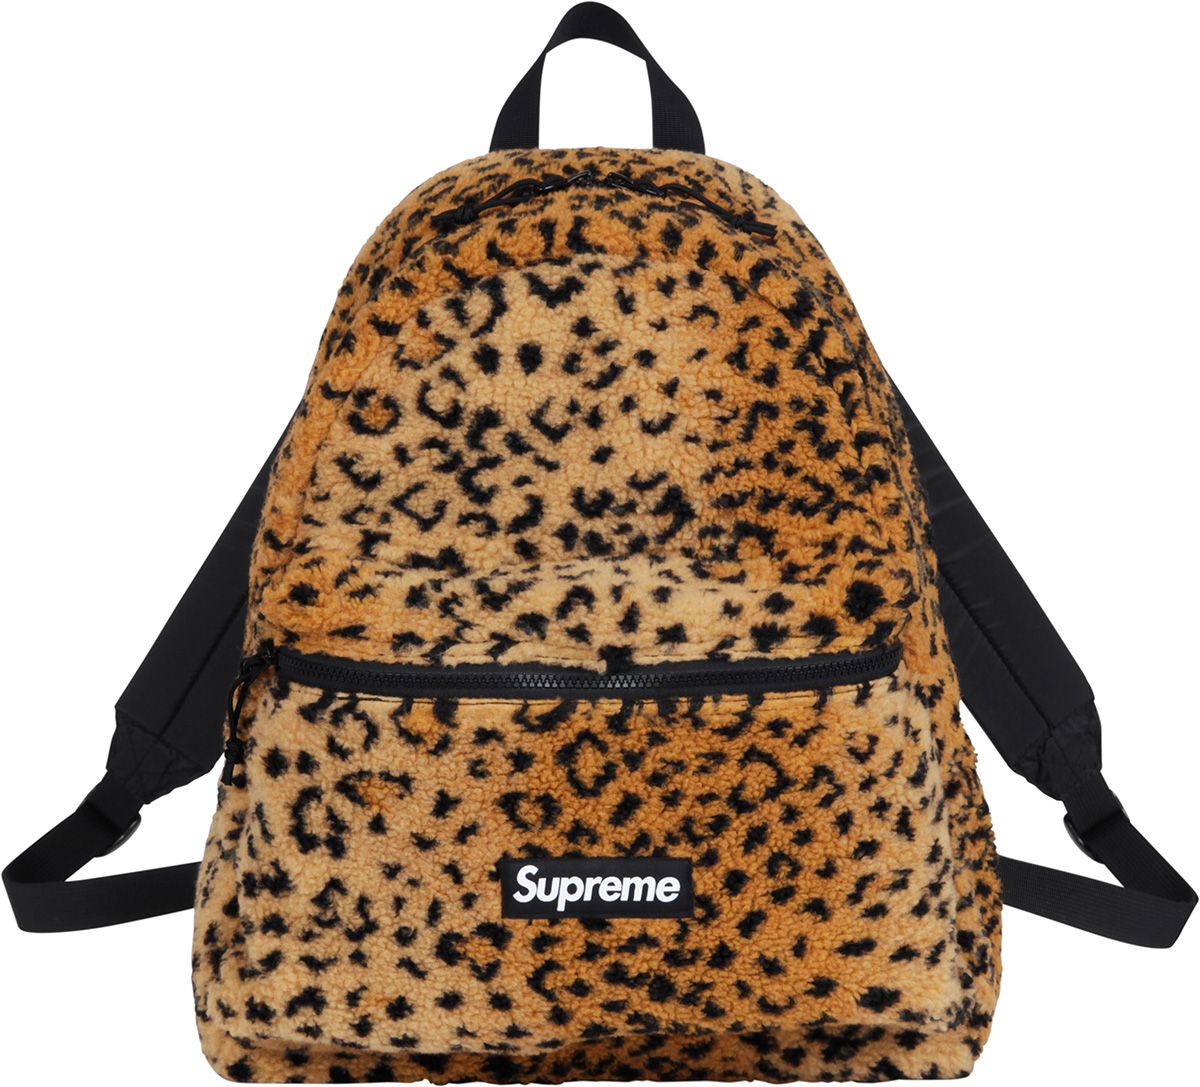 Leopard Print Flap Backpack, Vintage Zipper Front Daypack, Women's Canvas  Travel School Bag School Bag For Graduate, Teen Girls, Freshman, Sophomore,  Junior & Senior In College, University & High School, Perfect For